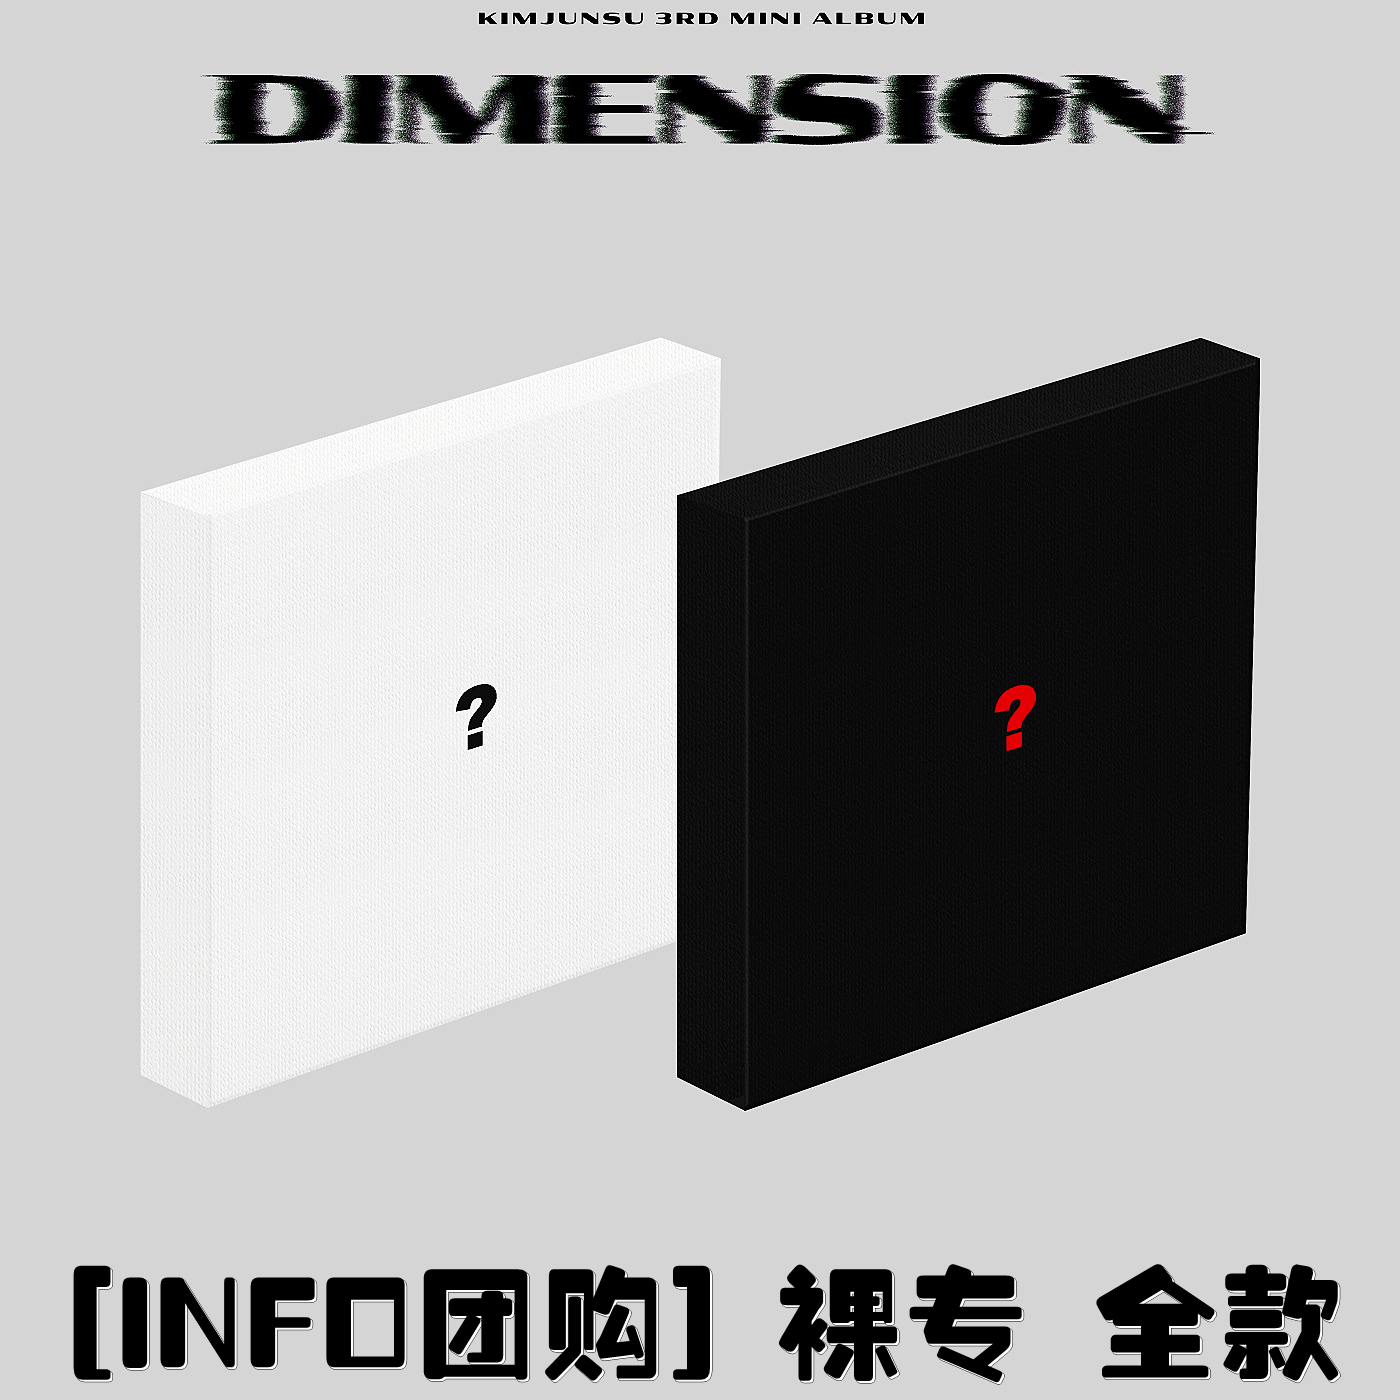 [全款 裸专] KIMJUNSU - 3rd MINI ALBUM [DIMENSION]_infoXIAtion金俊秀空间